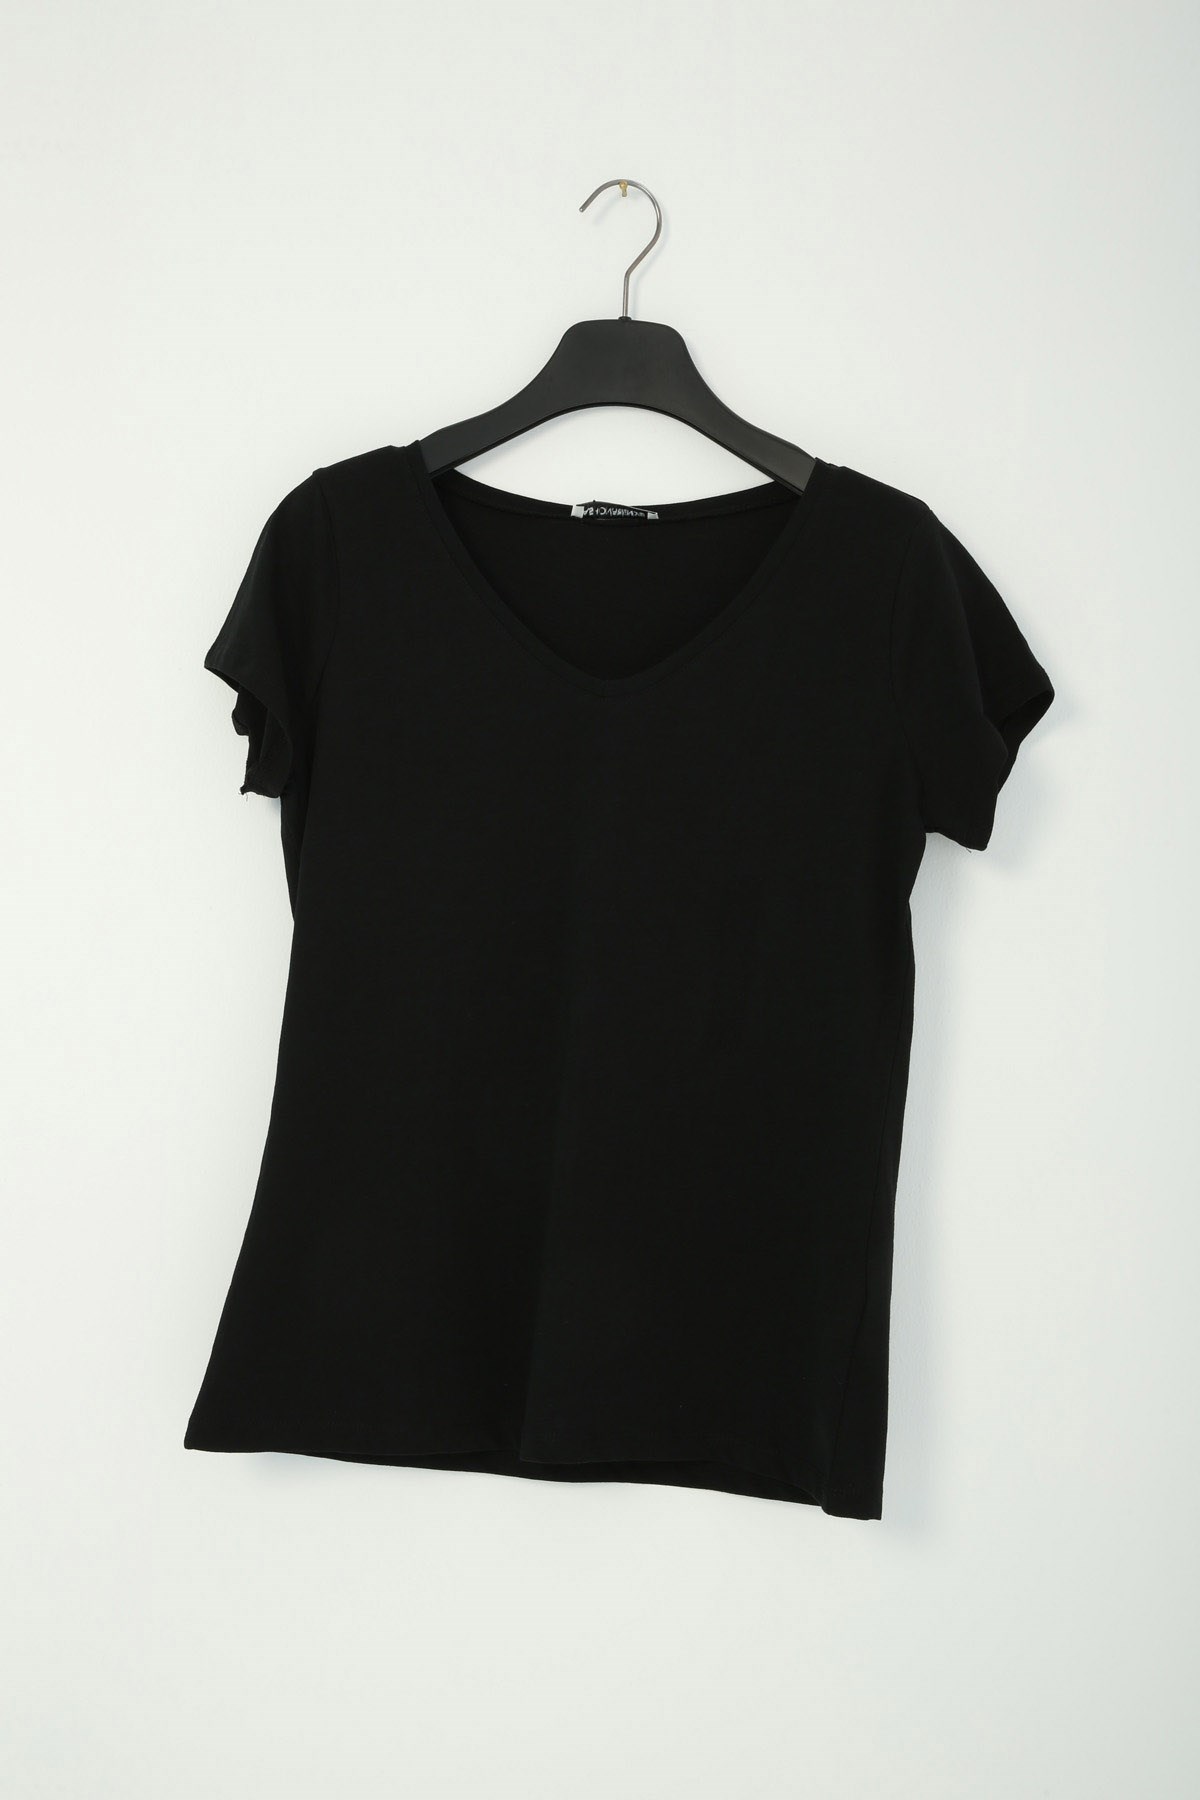 Fashion Friends Kadın T-Shirt 22Y0068K1 Siyah / Black